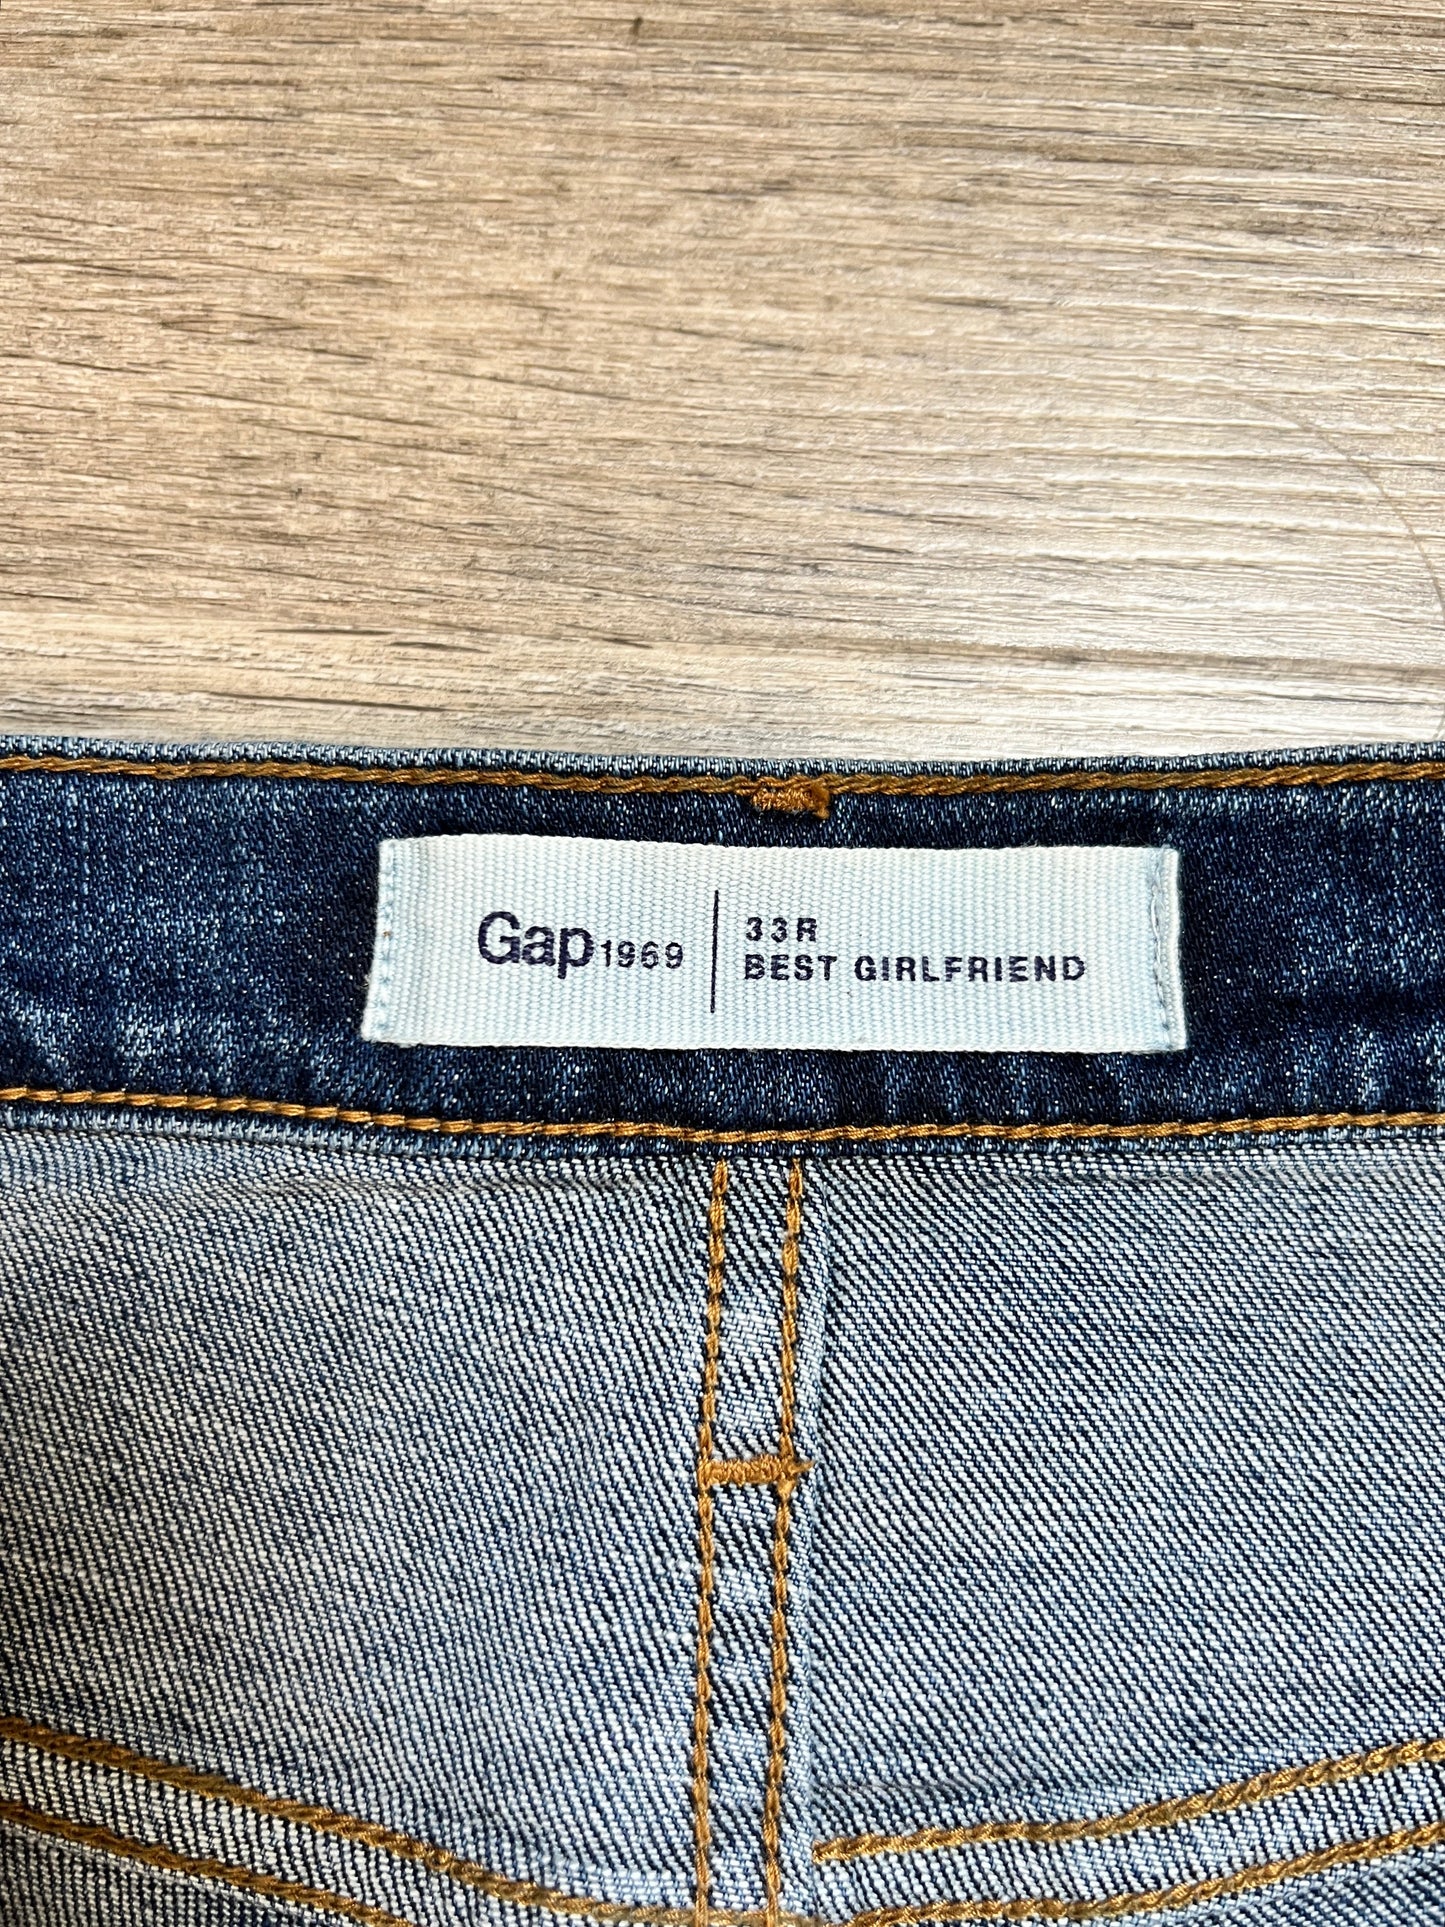 Jeans Relaxed/boyfriend By Gap  Size: 16